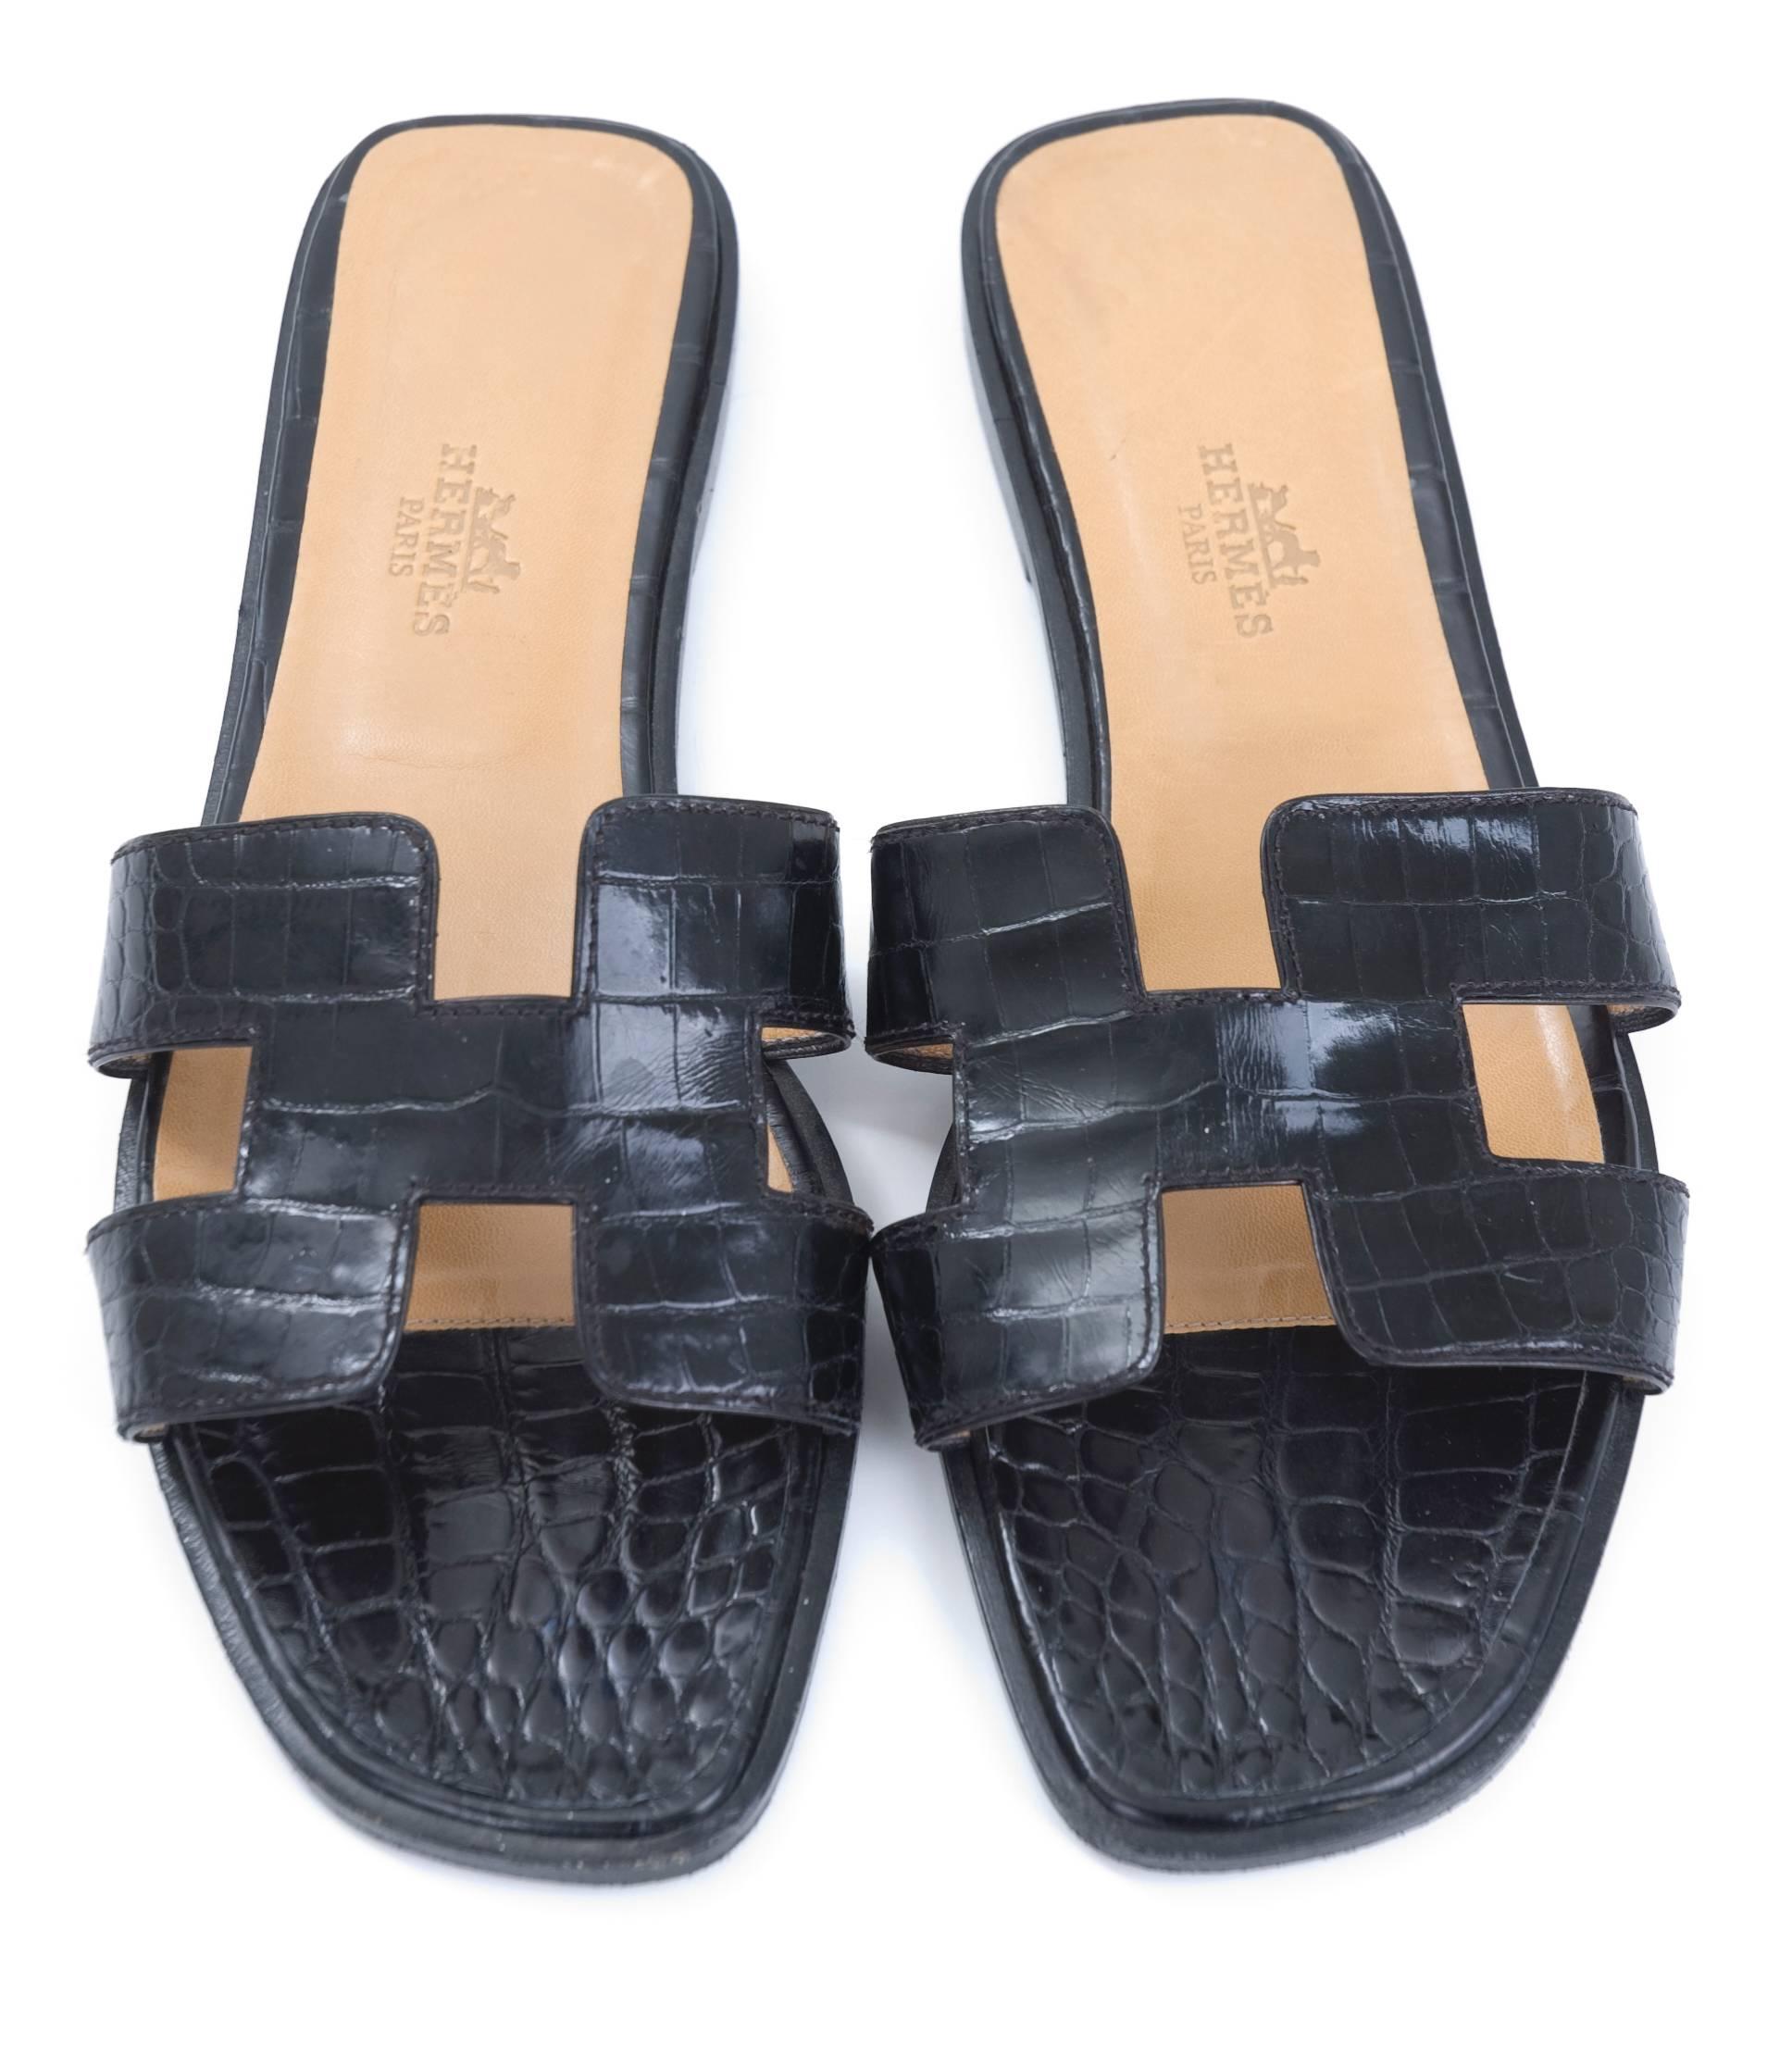 HERMÈS black crocodile ORAN sandals with stack heels.
Worn 1 time - excellent condition.
Retails was 2200 $
Size 39
